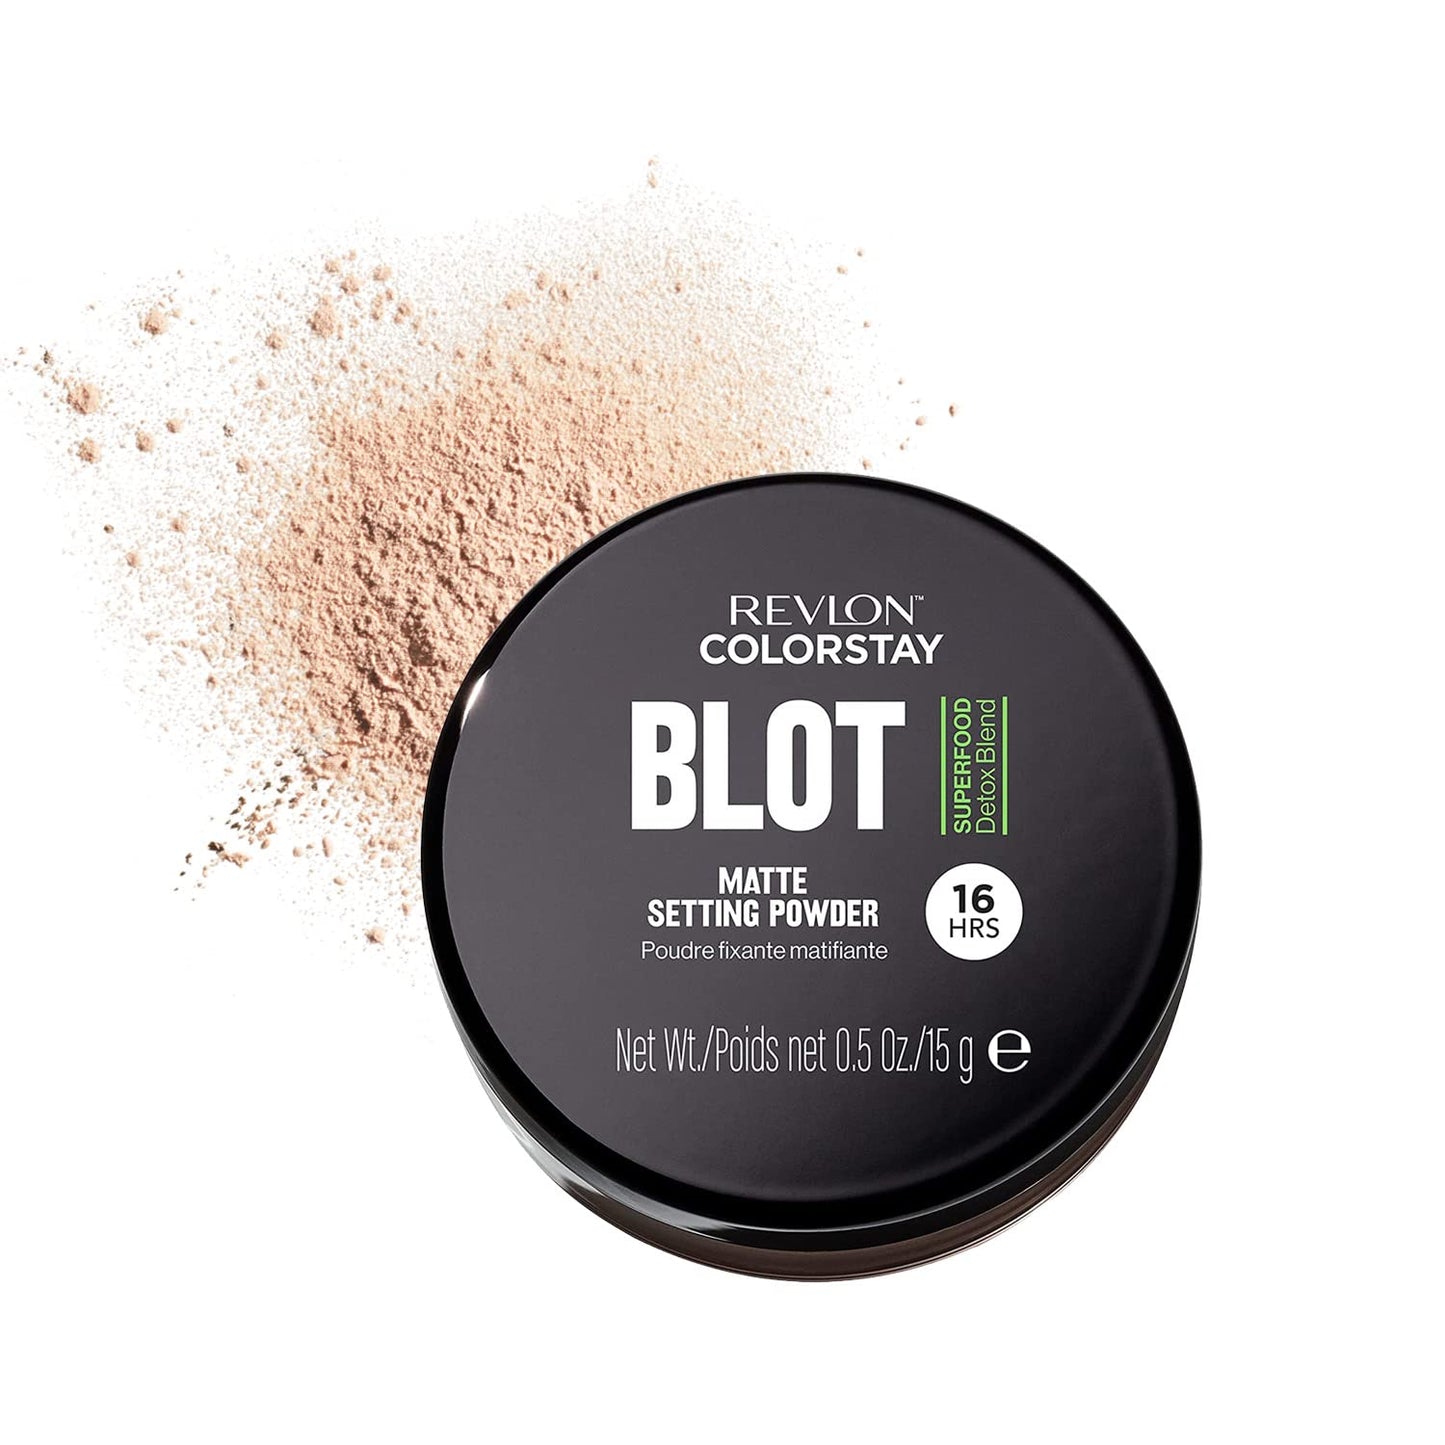 Revlon ColorStay Blot Face Powder Blurring & Oil Absorbing Setting Powder